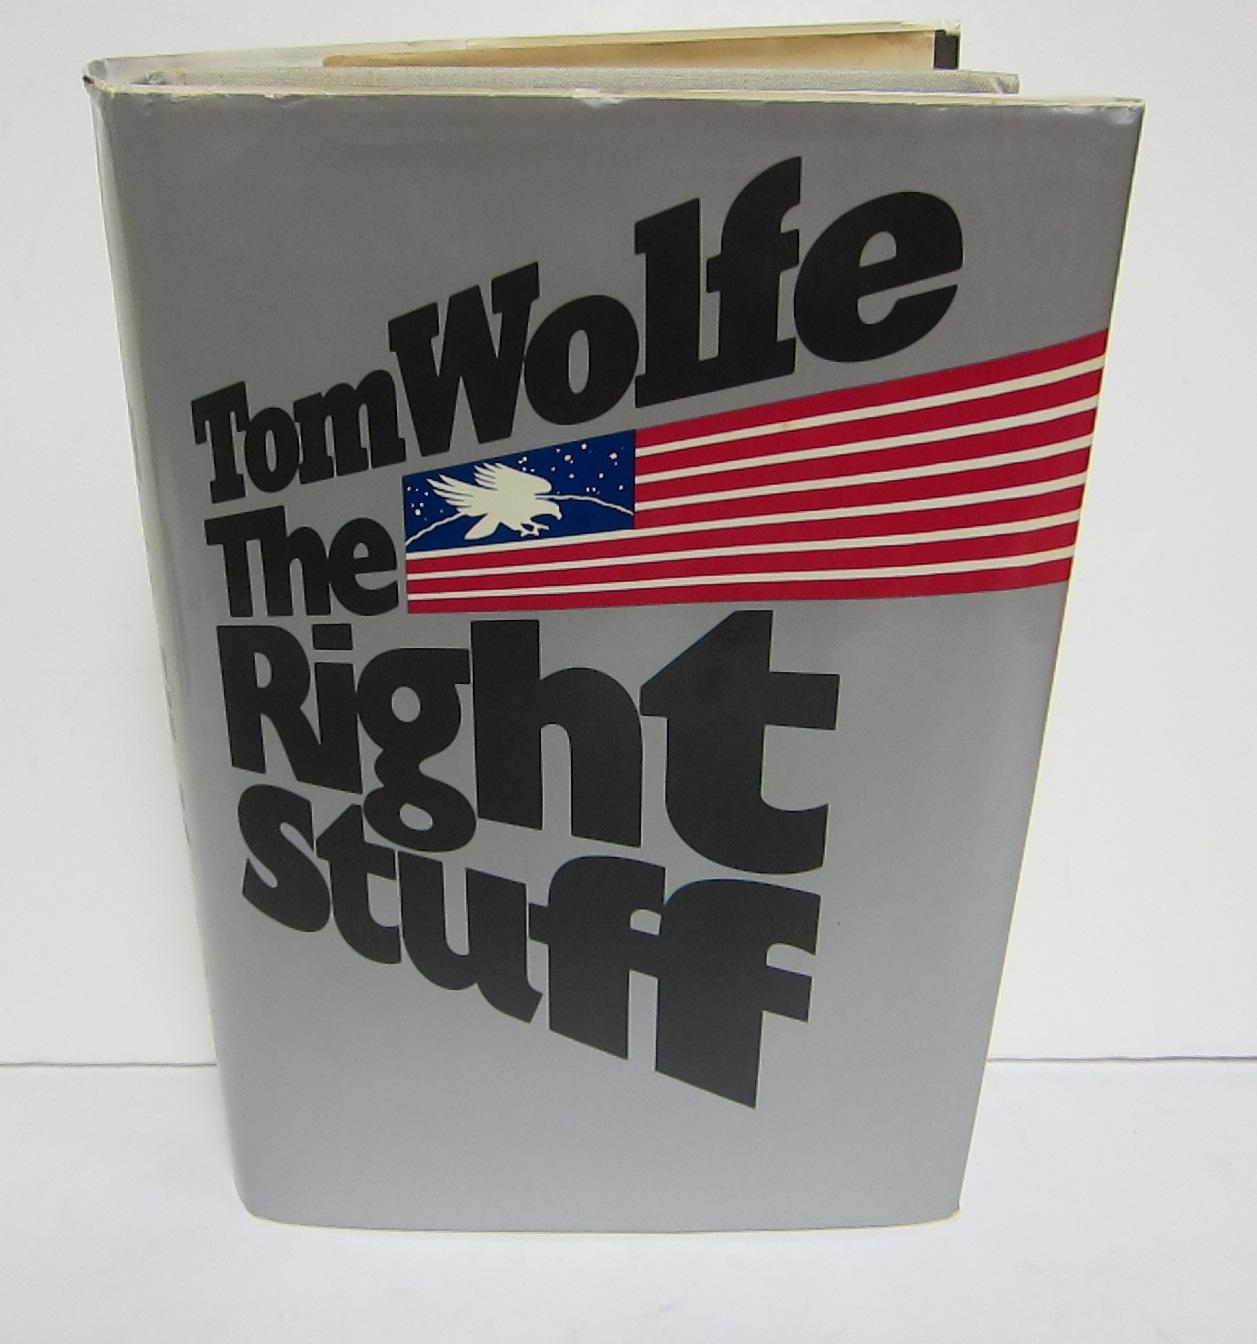 Happy 87th birthday Tom Wolfe 